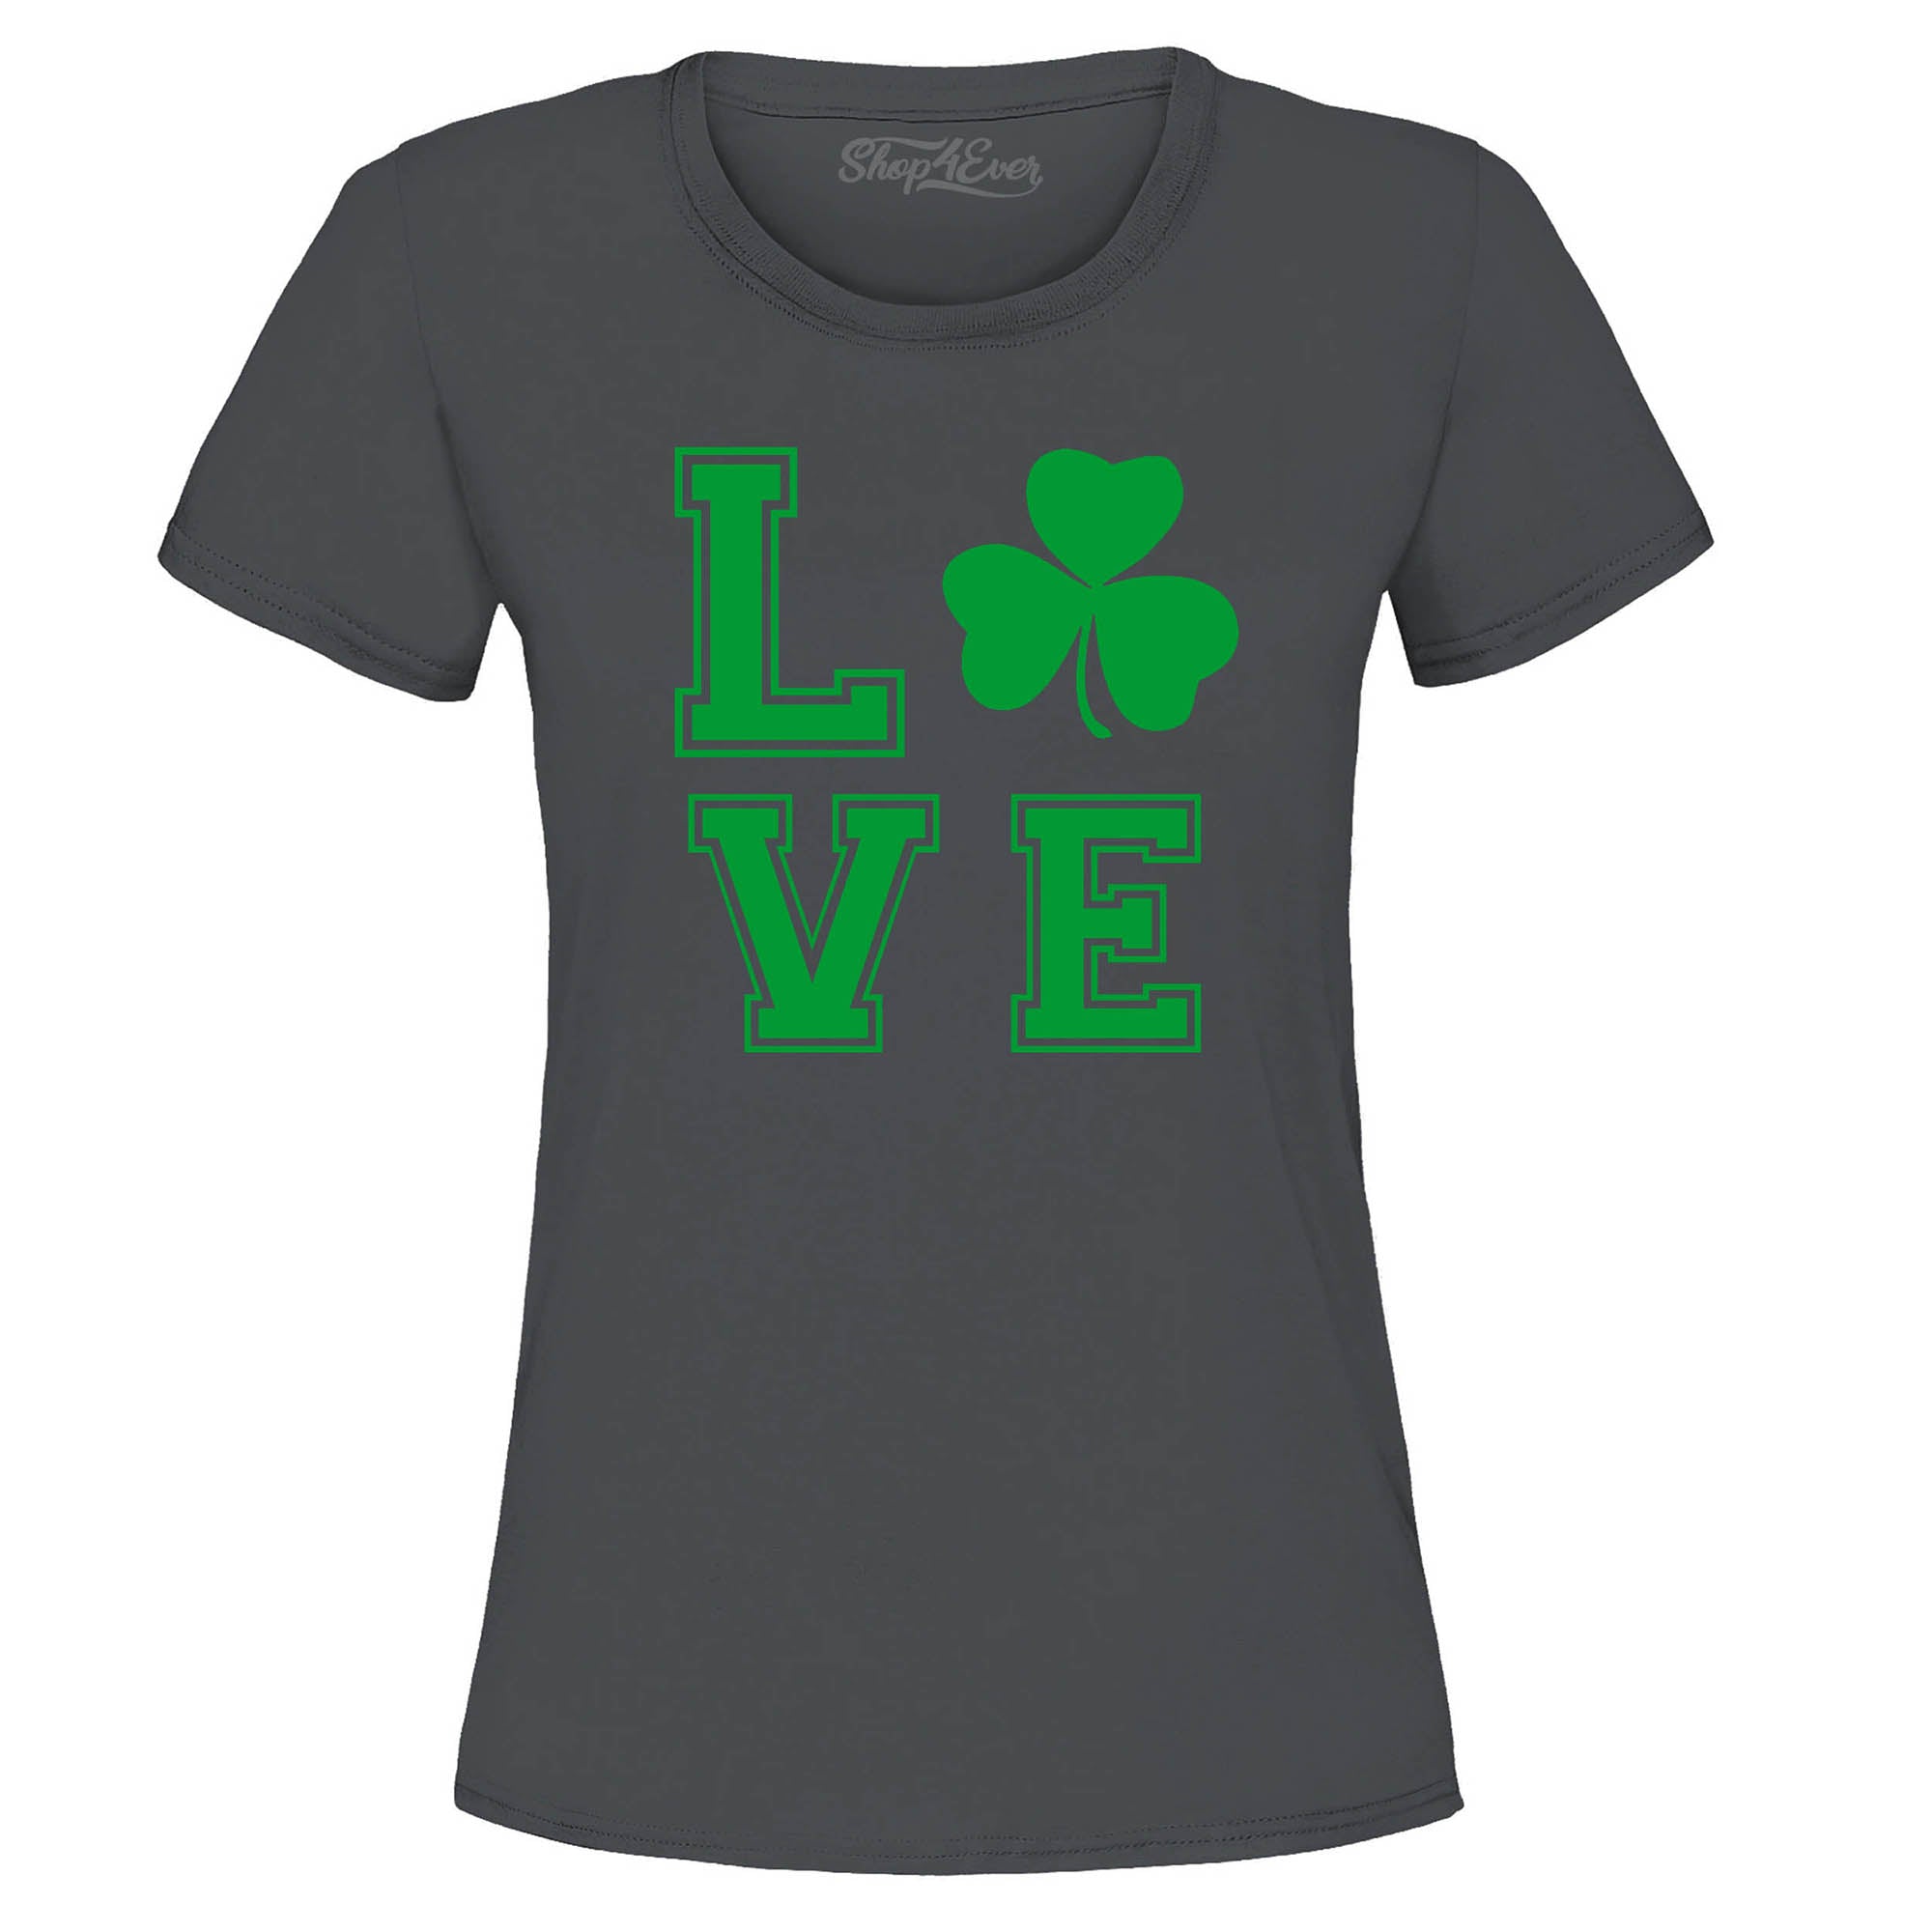 Green Shamrock Love Women's T-Shirt St. Patricks Day Shirts